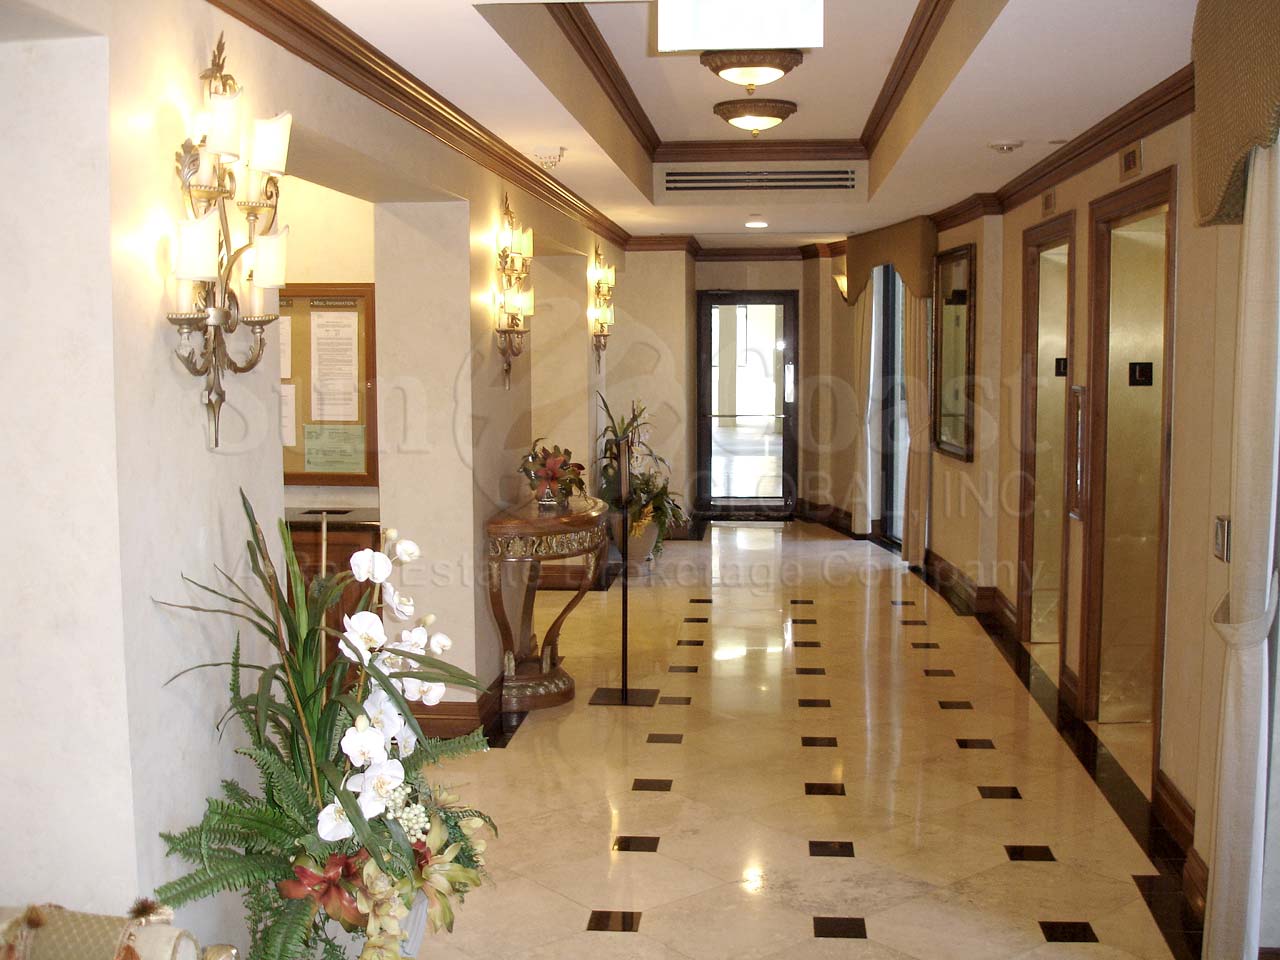 Caribe Lobby and Elevator